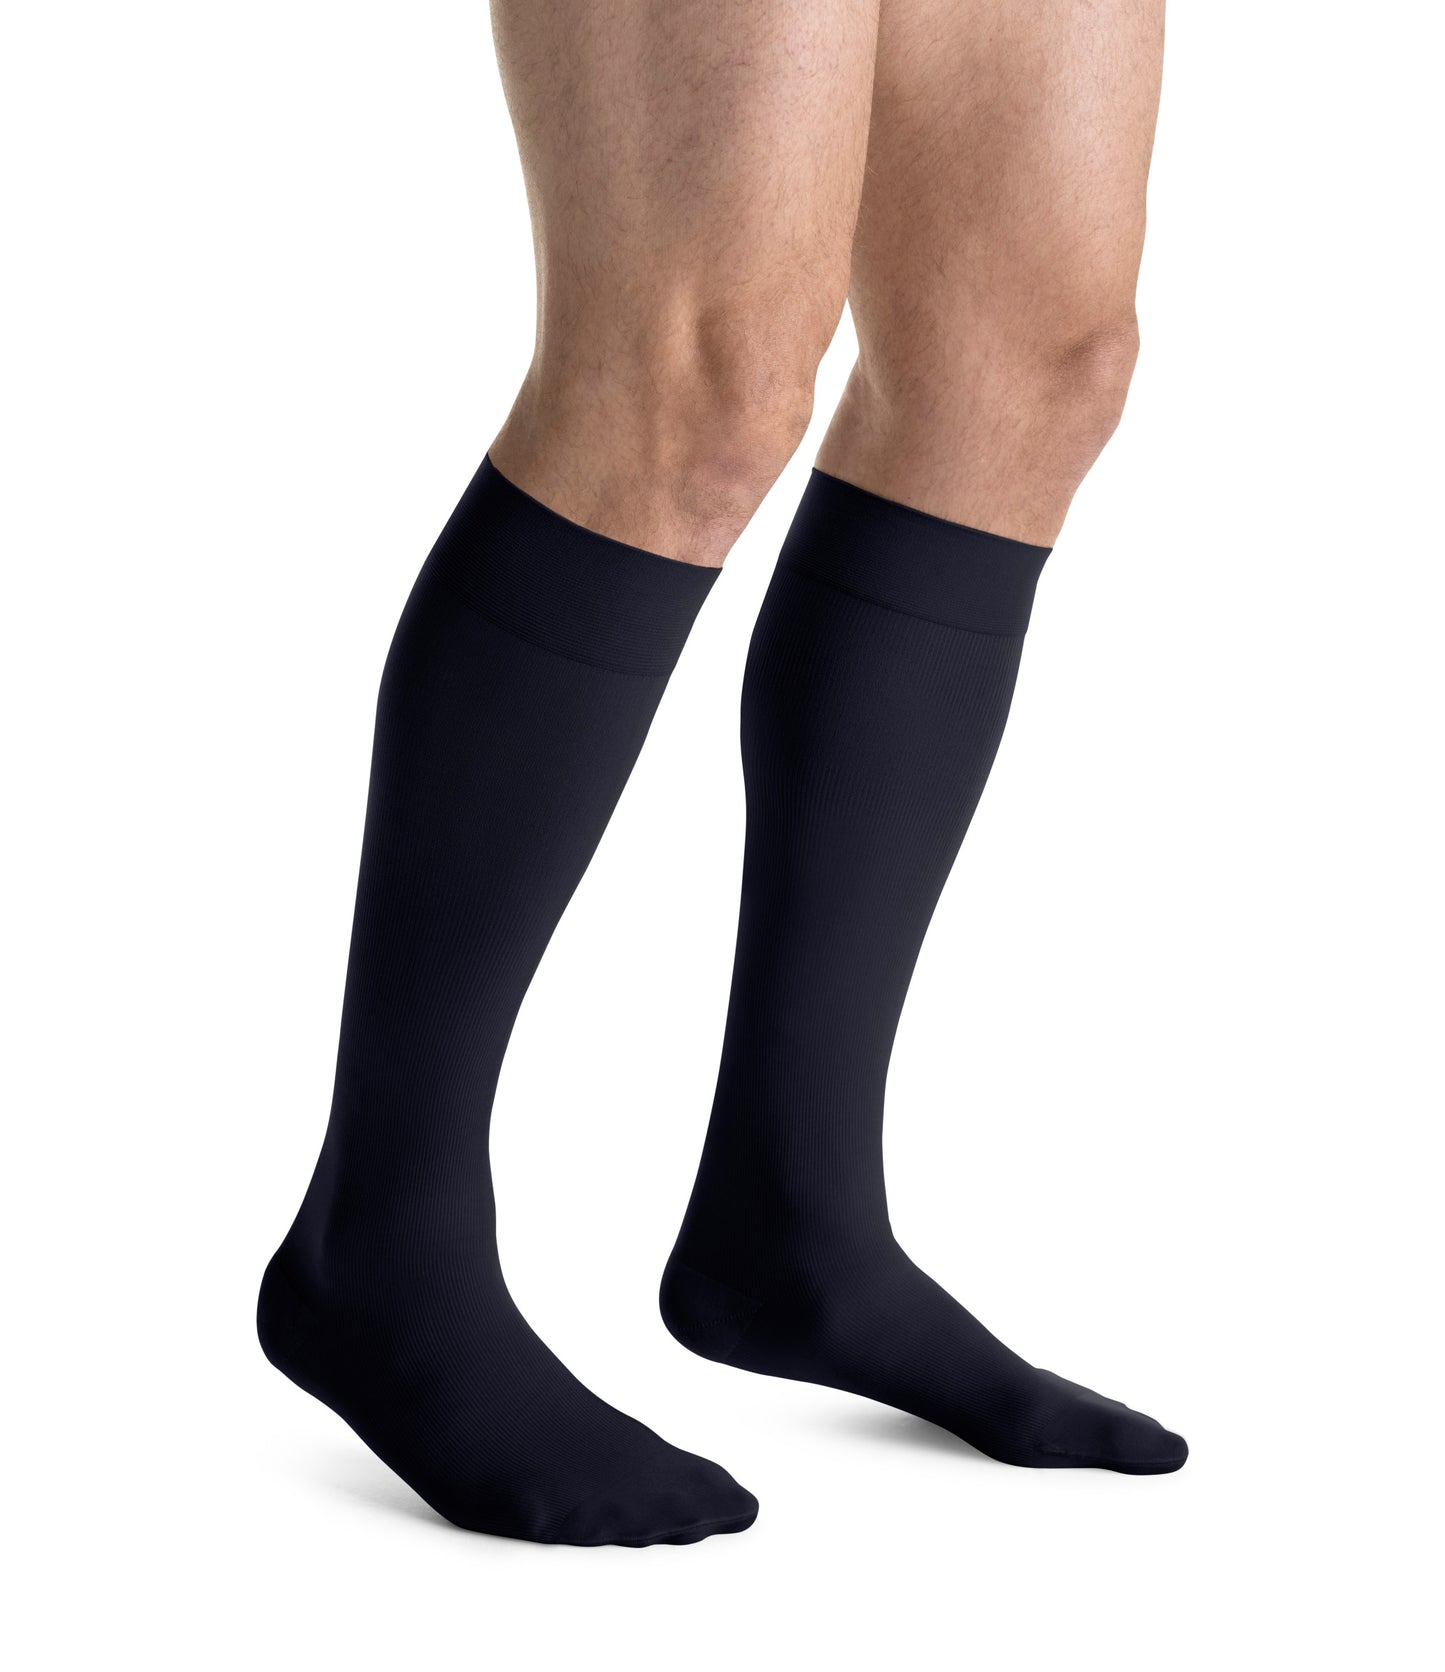 JOBST forMen Casual Compression Socks 15-20 mmHg Knee High Closed Toe